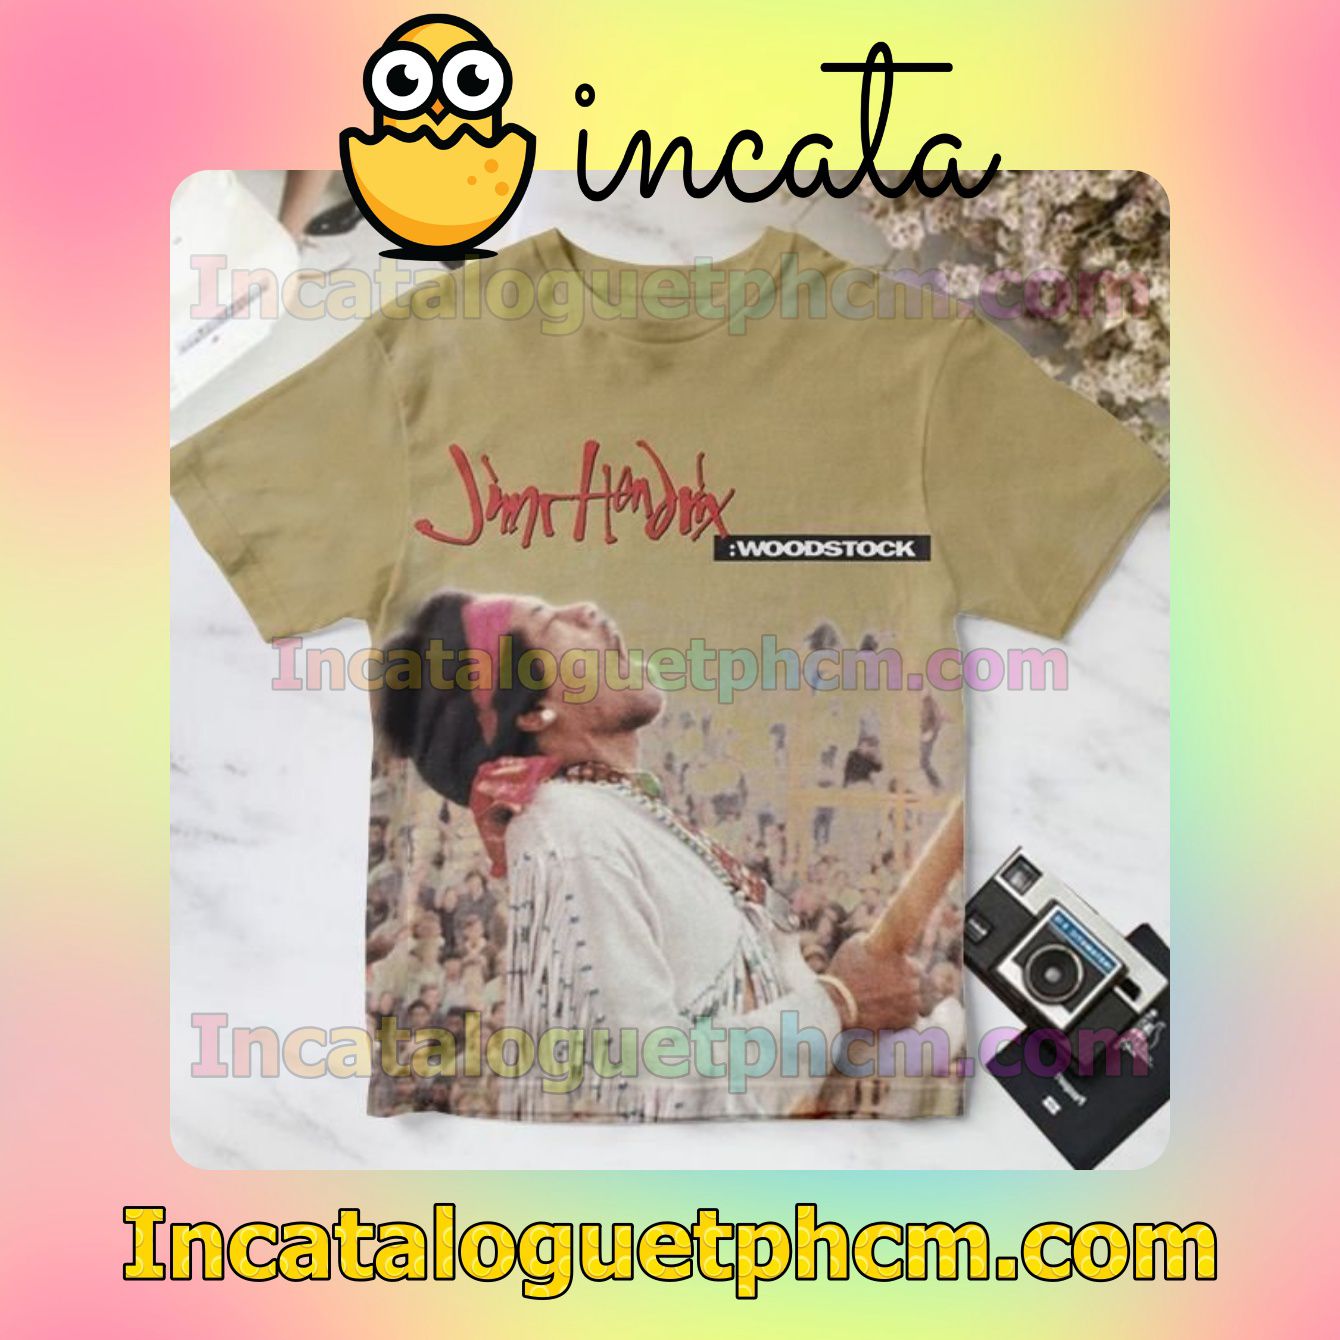 Jimi Hendrix Woodstock Album Cover Personalized Shirt